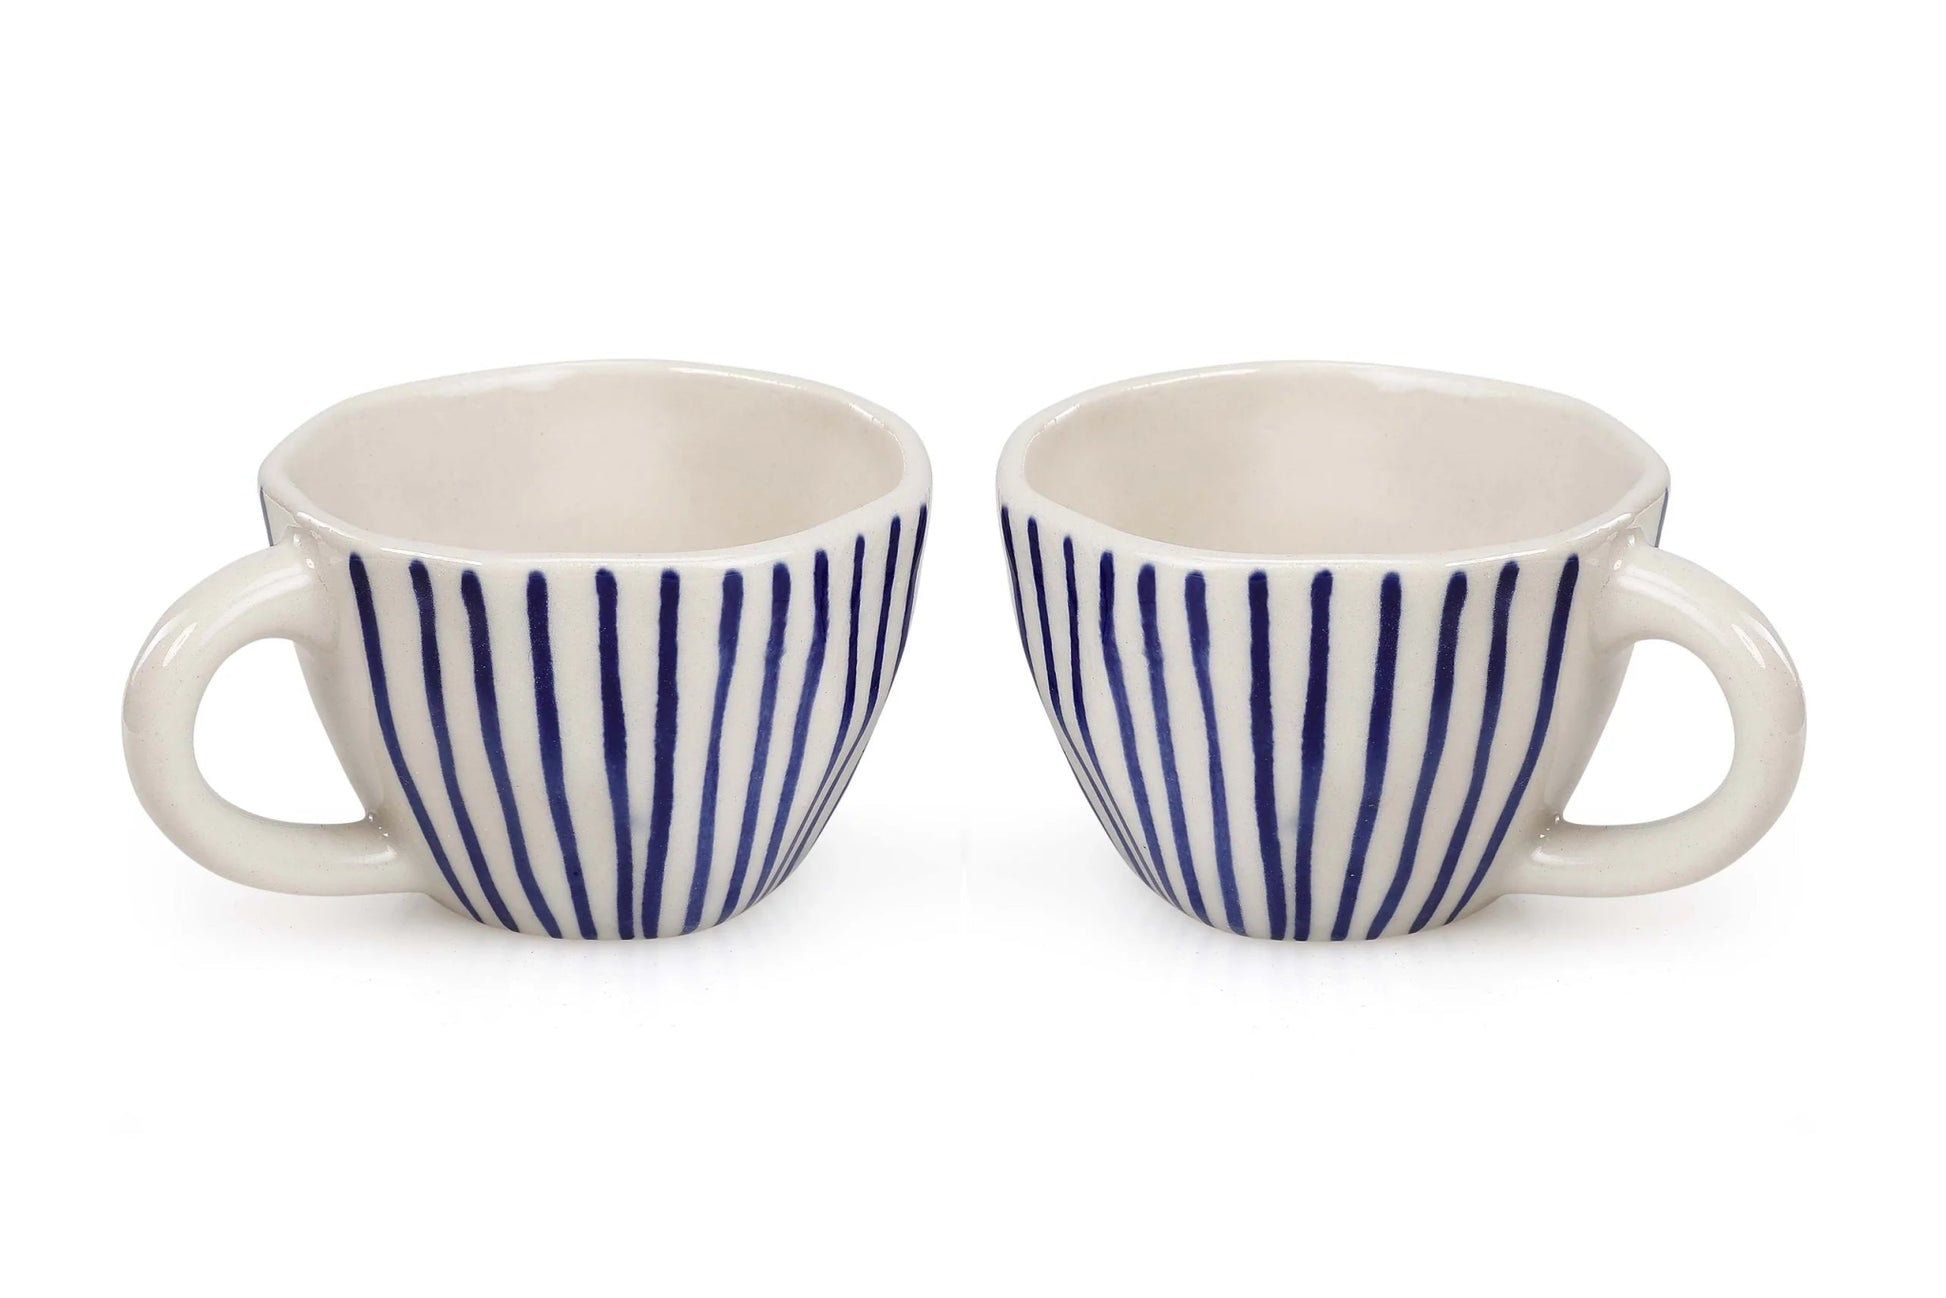 Ceramic Vertical Striped Mug - Global Hues Market